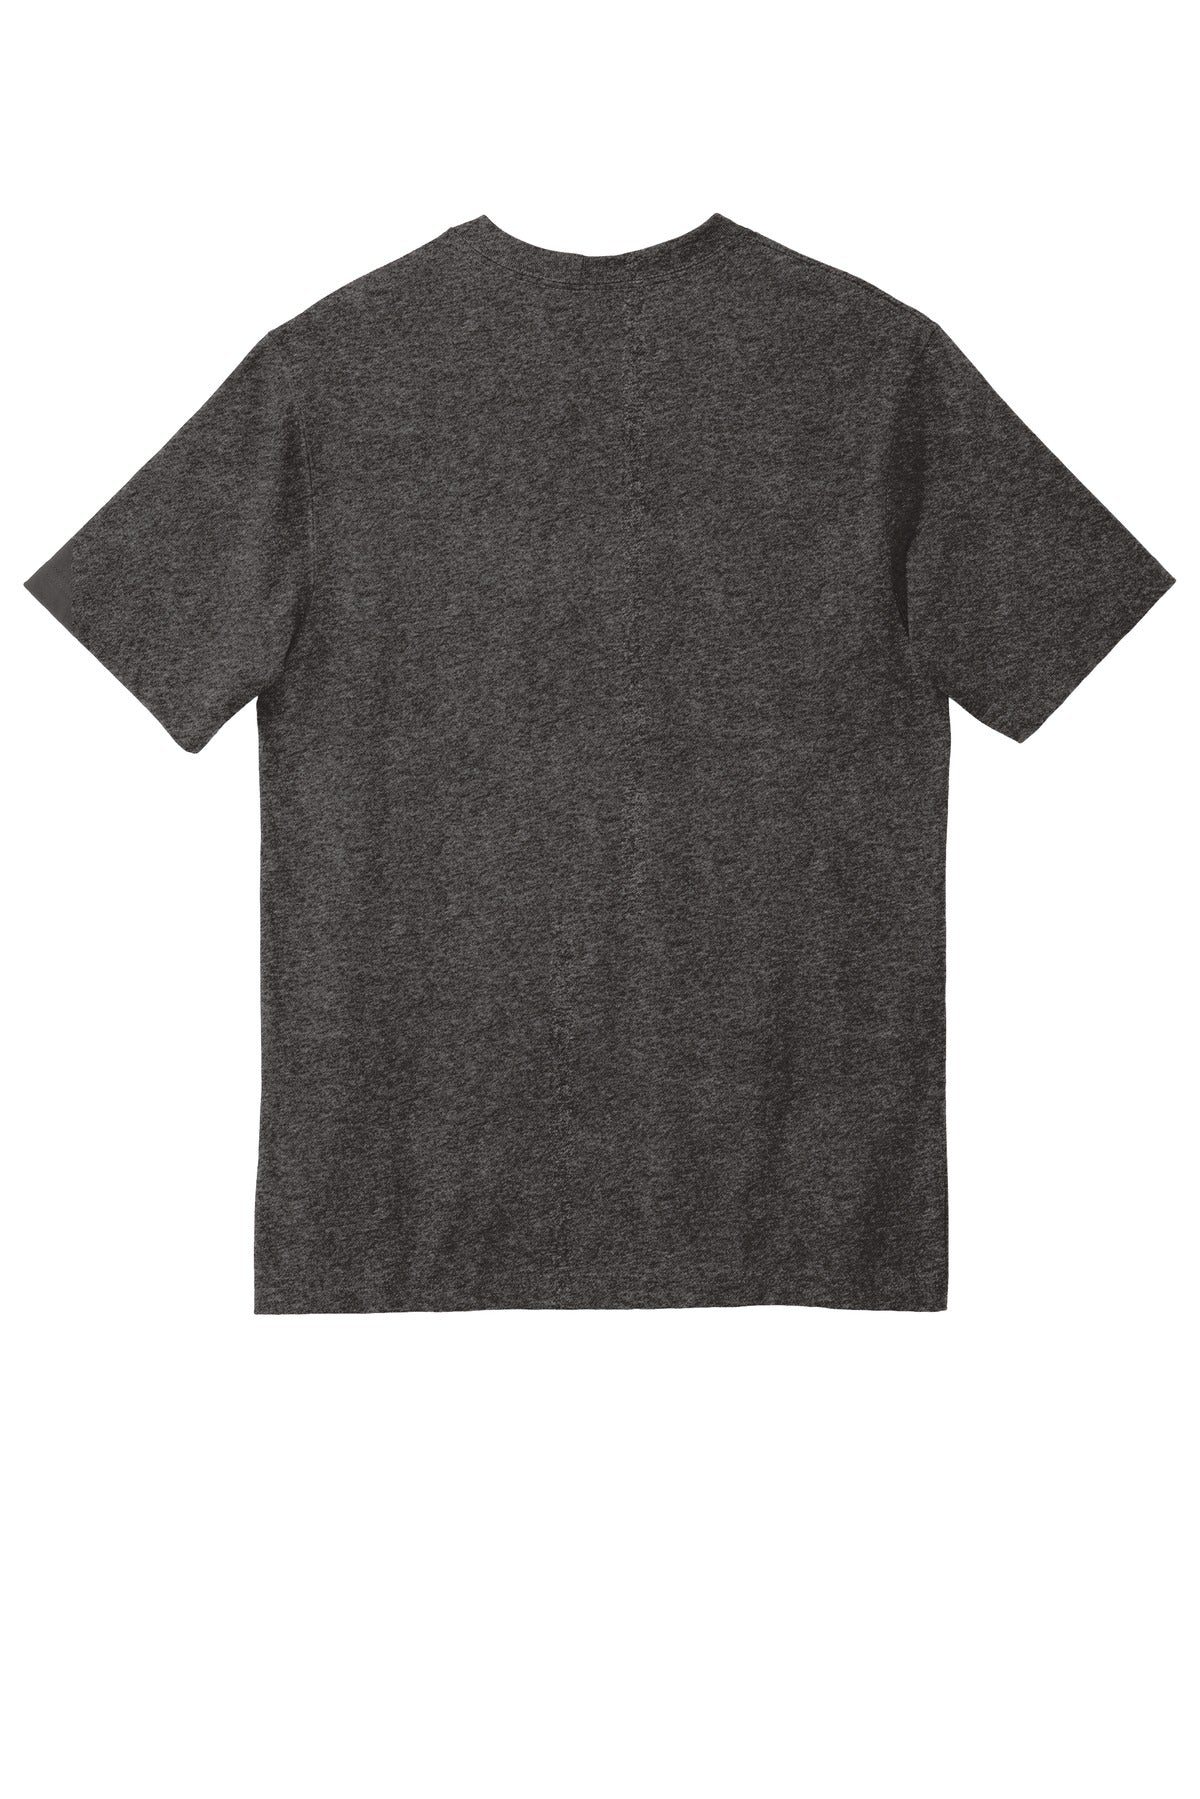 Swaasi Core - Carhartt® POCKET Workwear Short Sleeve T-Shirt with EMB Logo